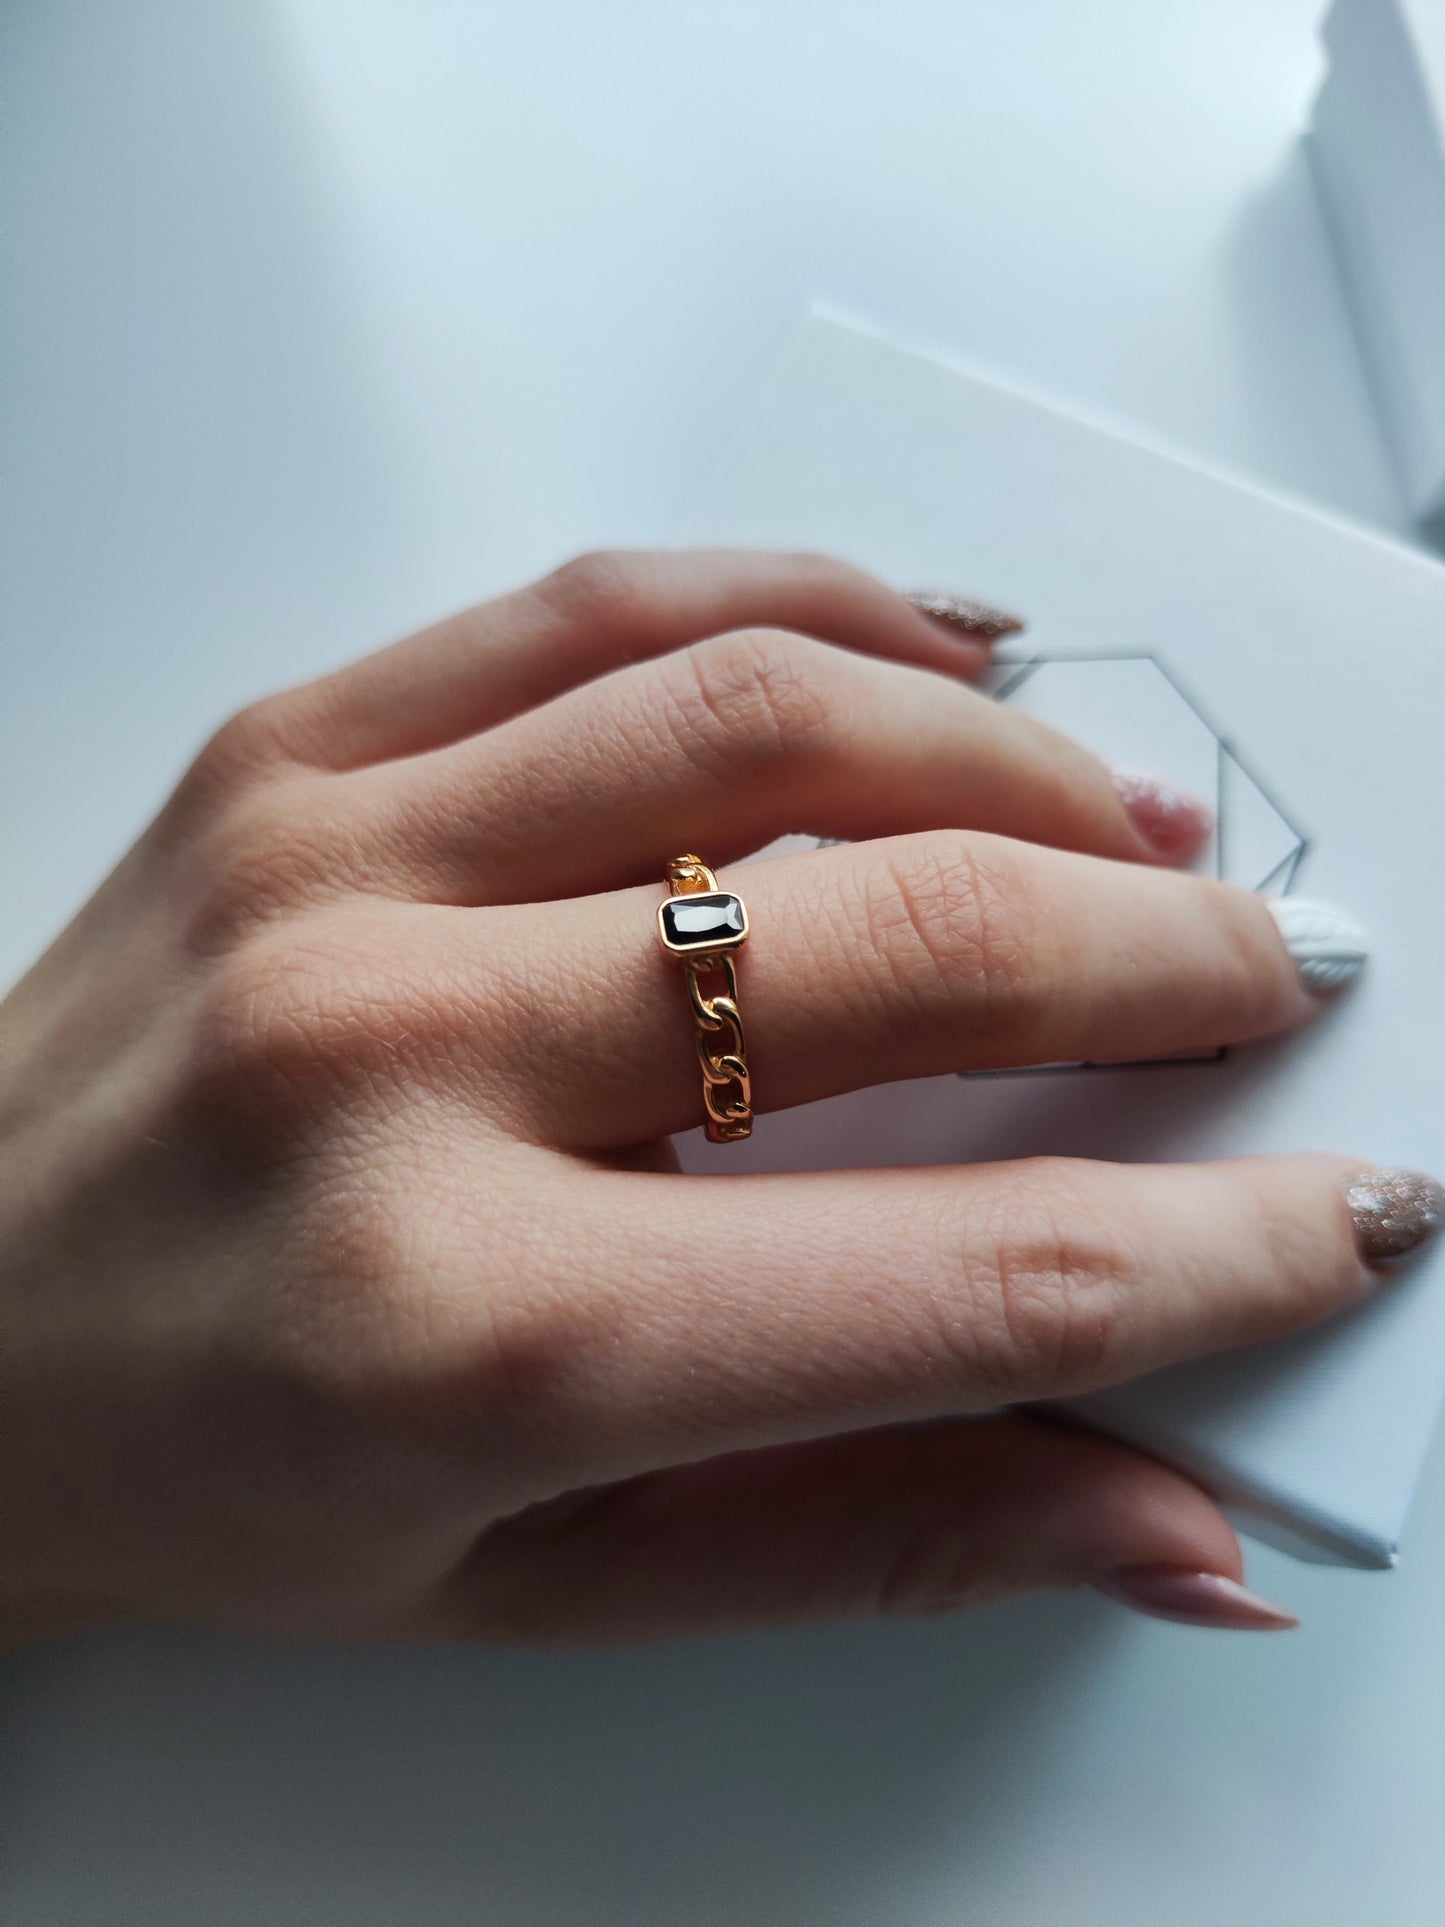 Golden Chain Ring Black CZ - Amona Jewelry